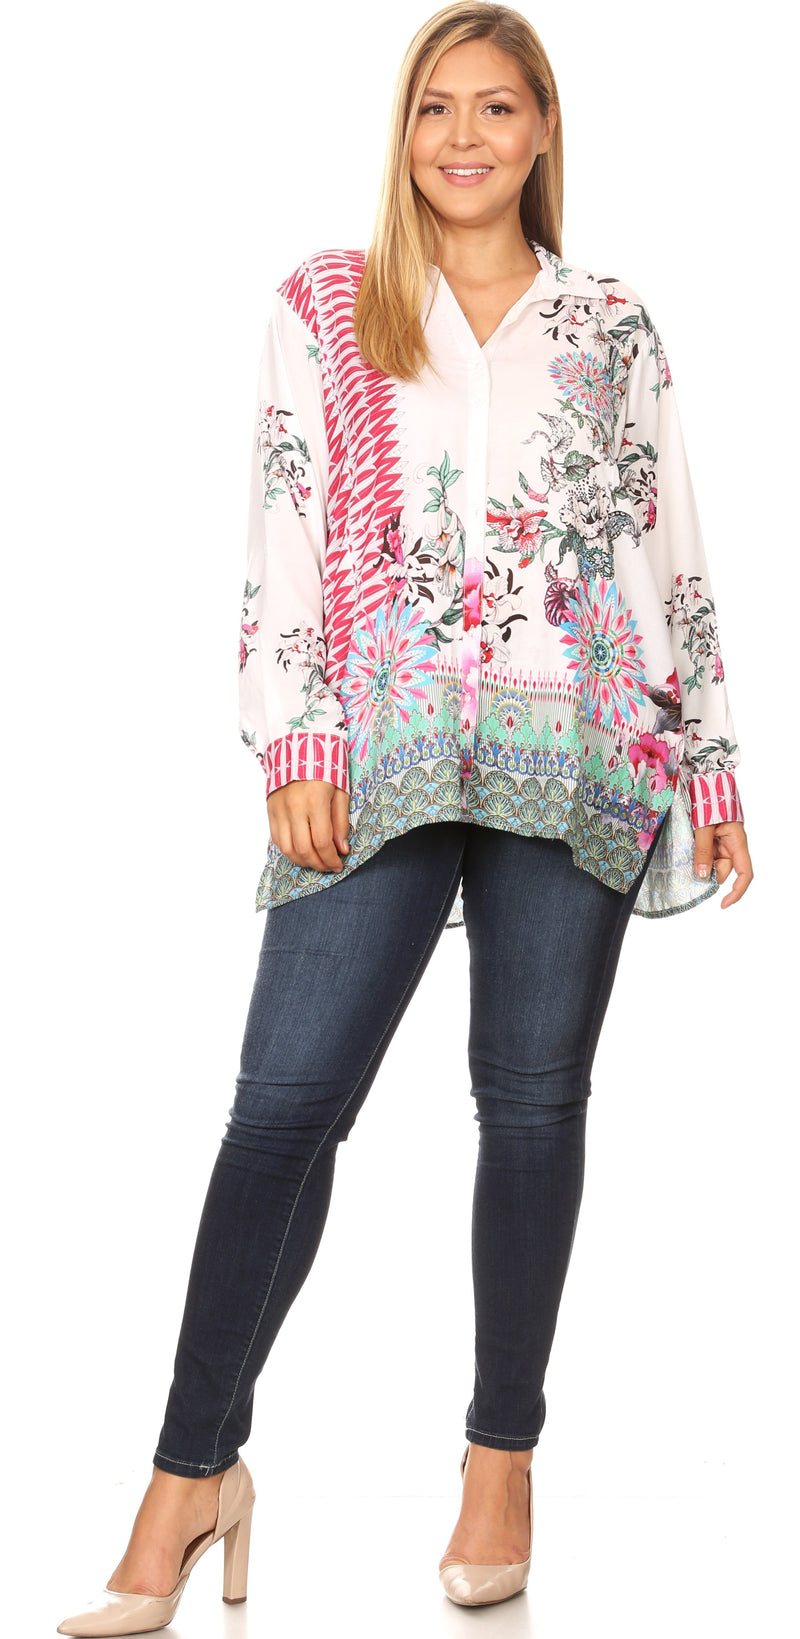 Sakkas Issa Women's Long Sleeve Floral Print Casual Button Down Shirt Blouse Top